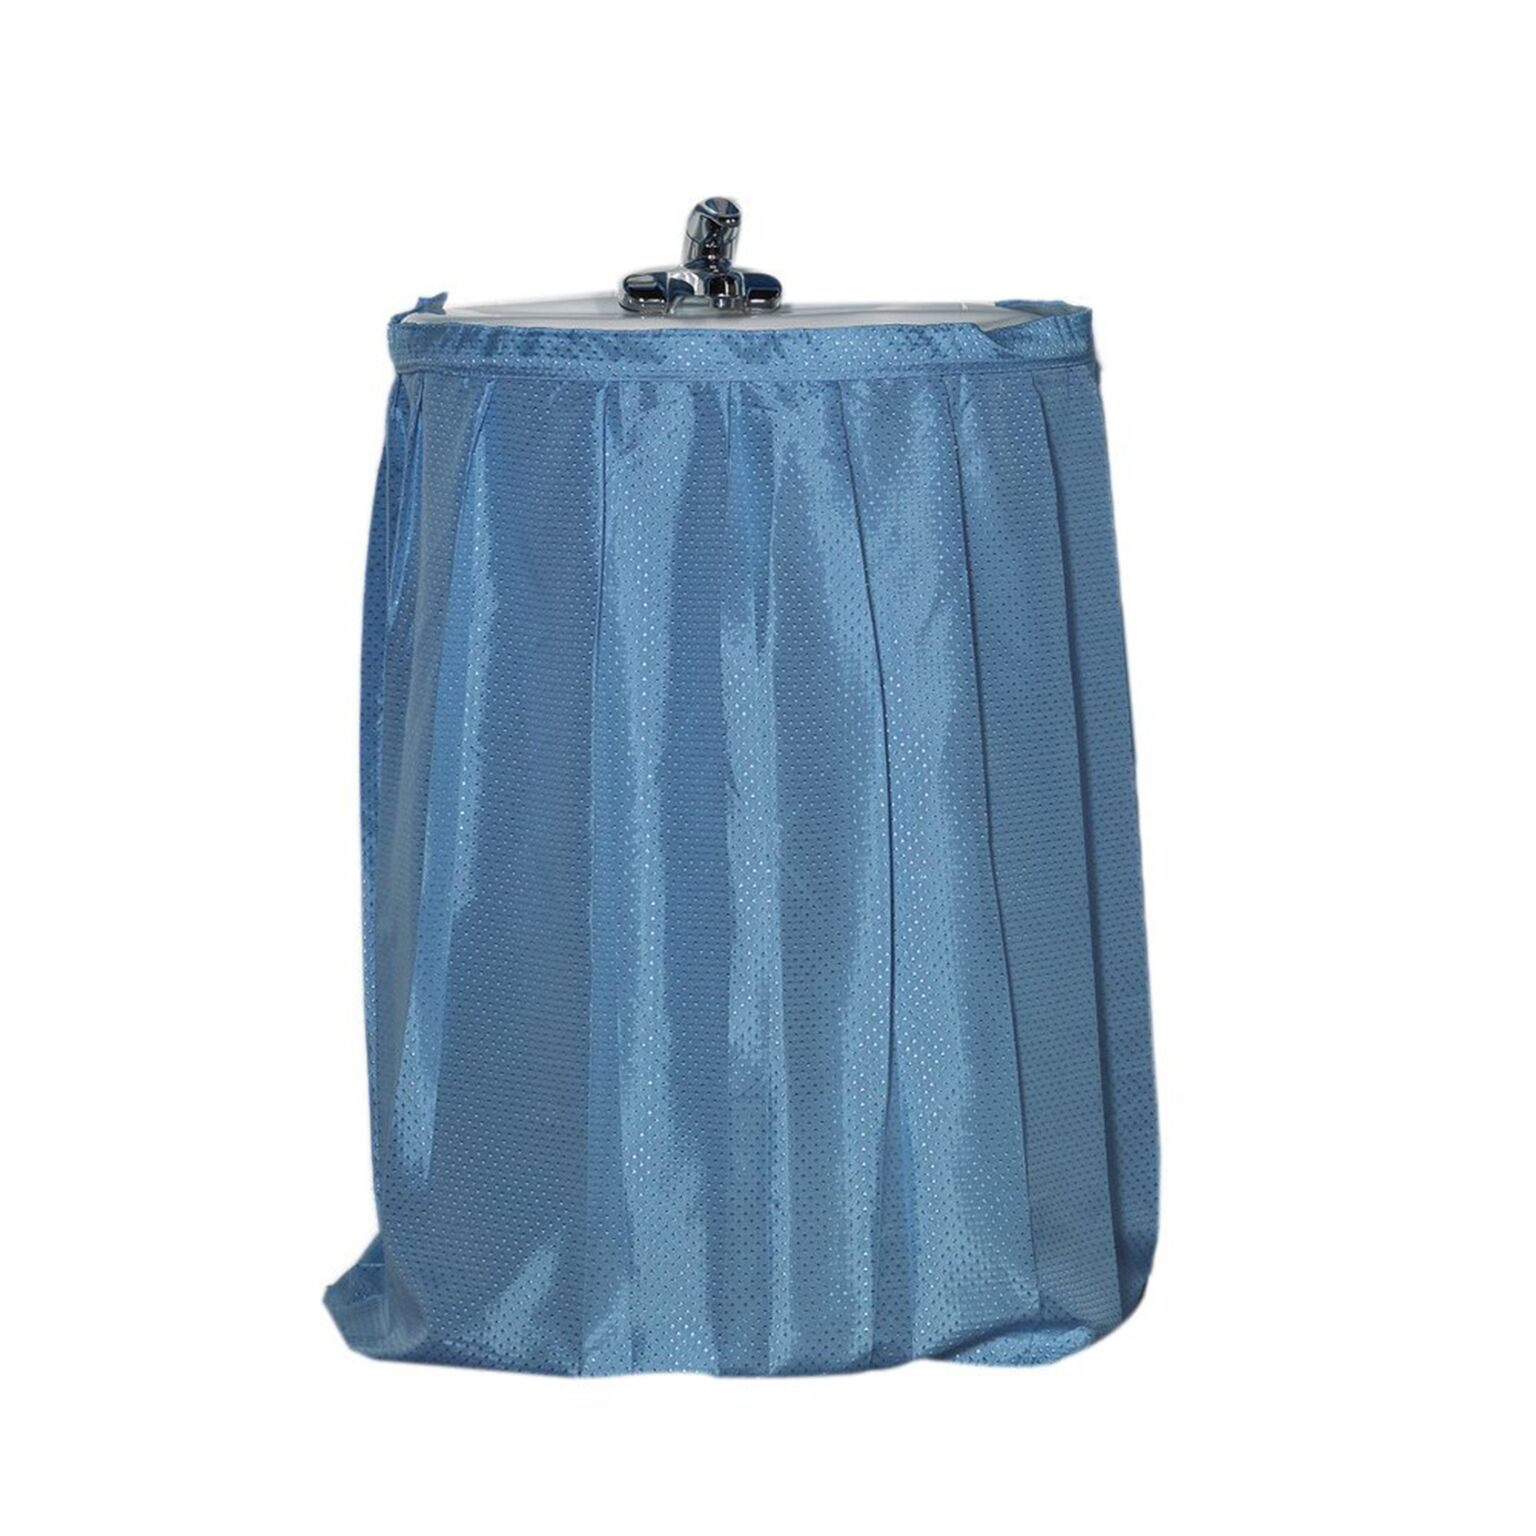 Fabric Bathroom Dobby Sink Skirt/Drape - Light Blue - image 1 of 1